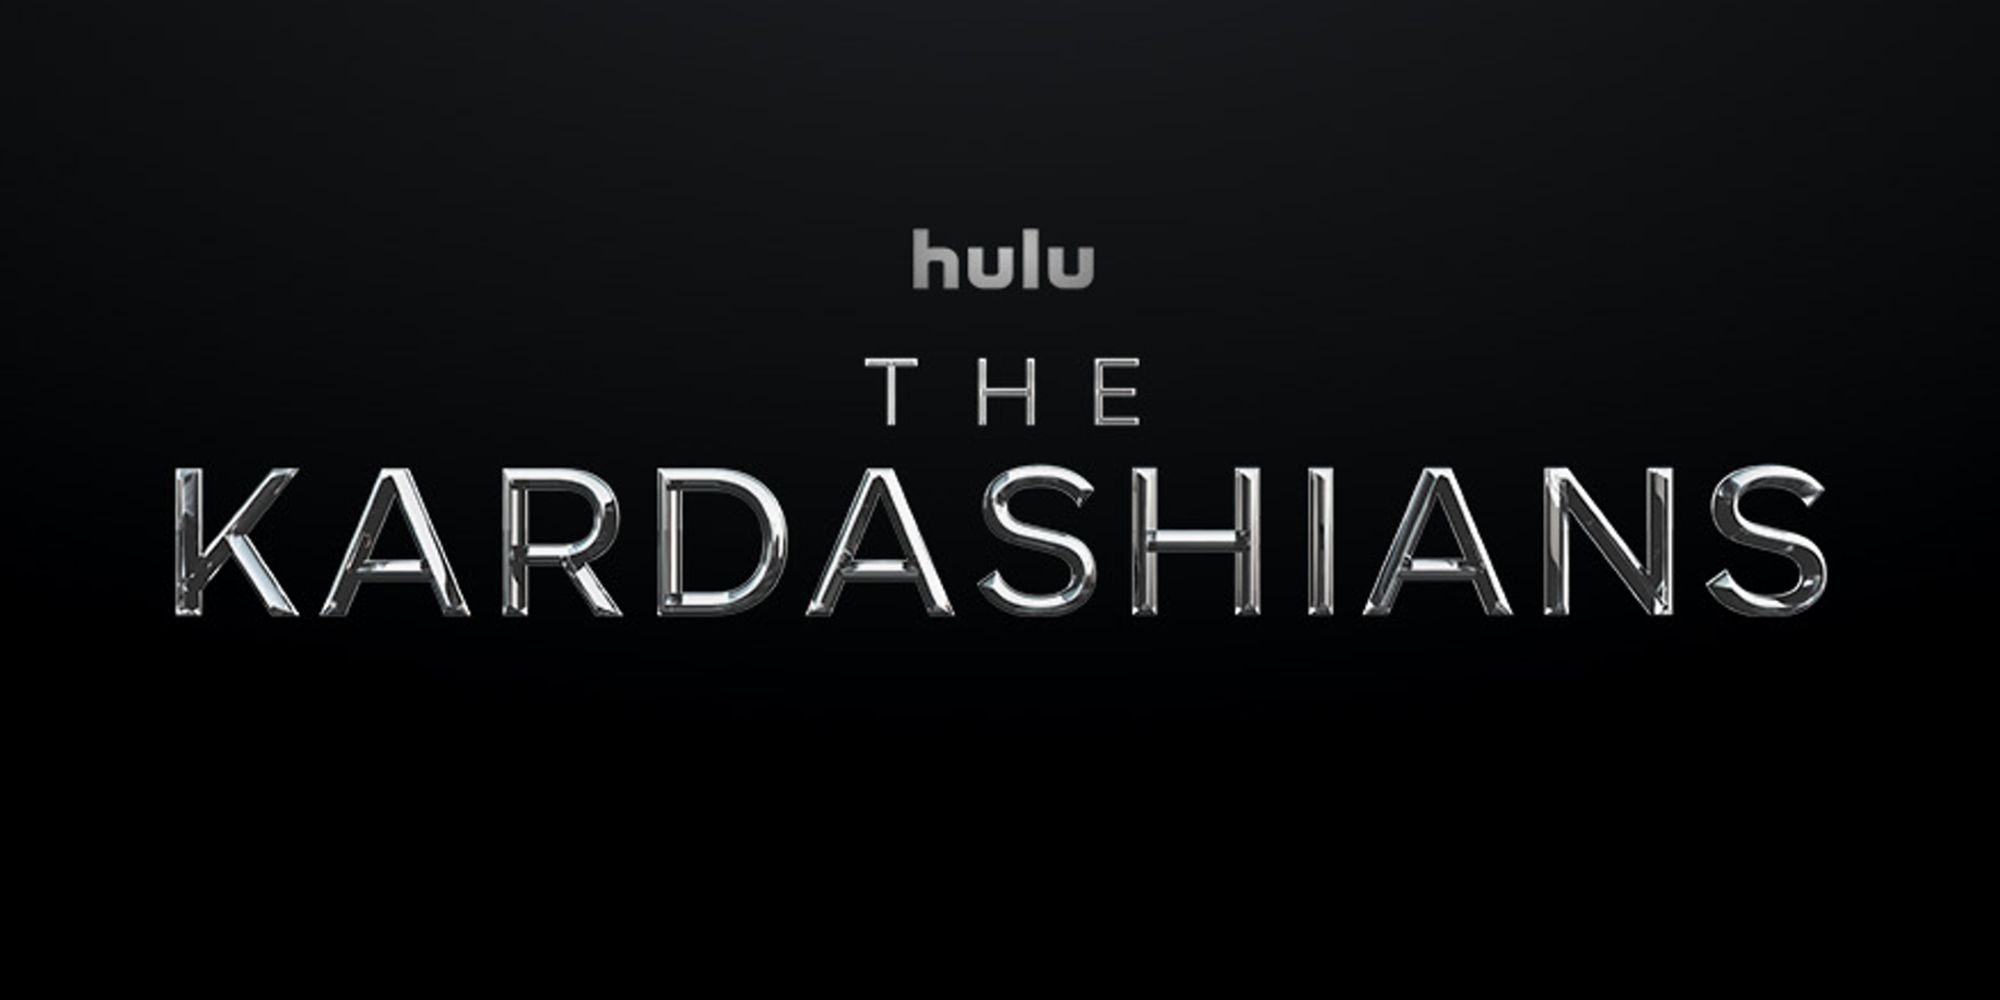 The Kardashians logo